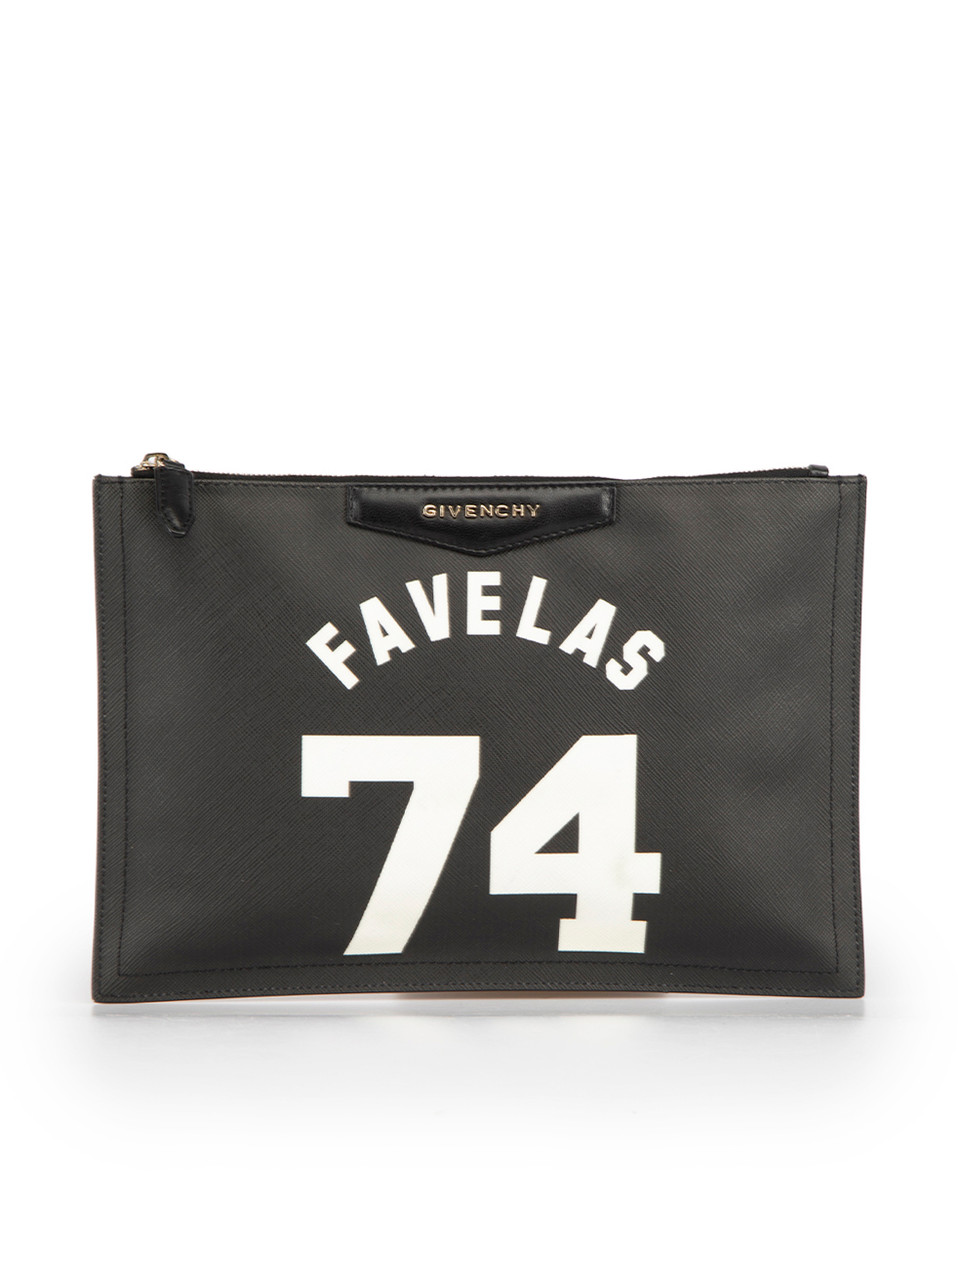 Givenchy Black Favelas 74 Zipped Clutch